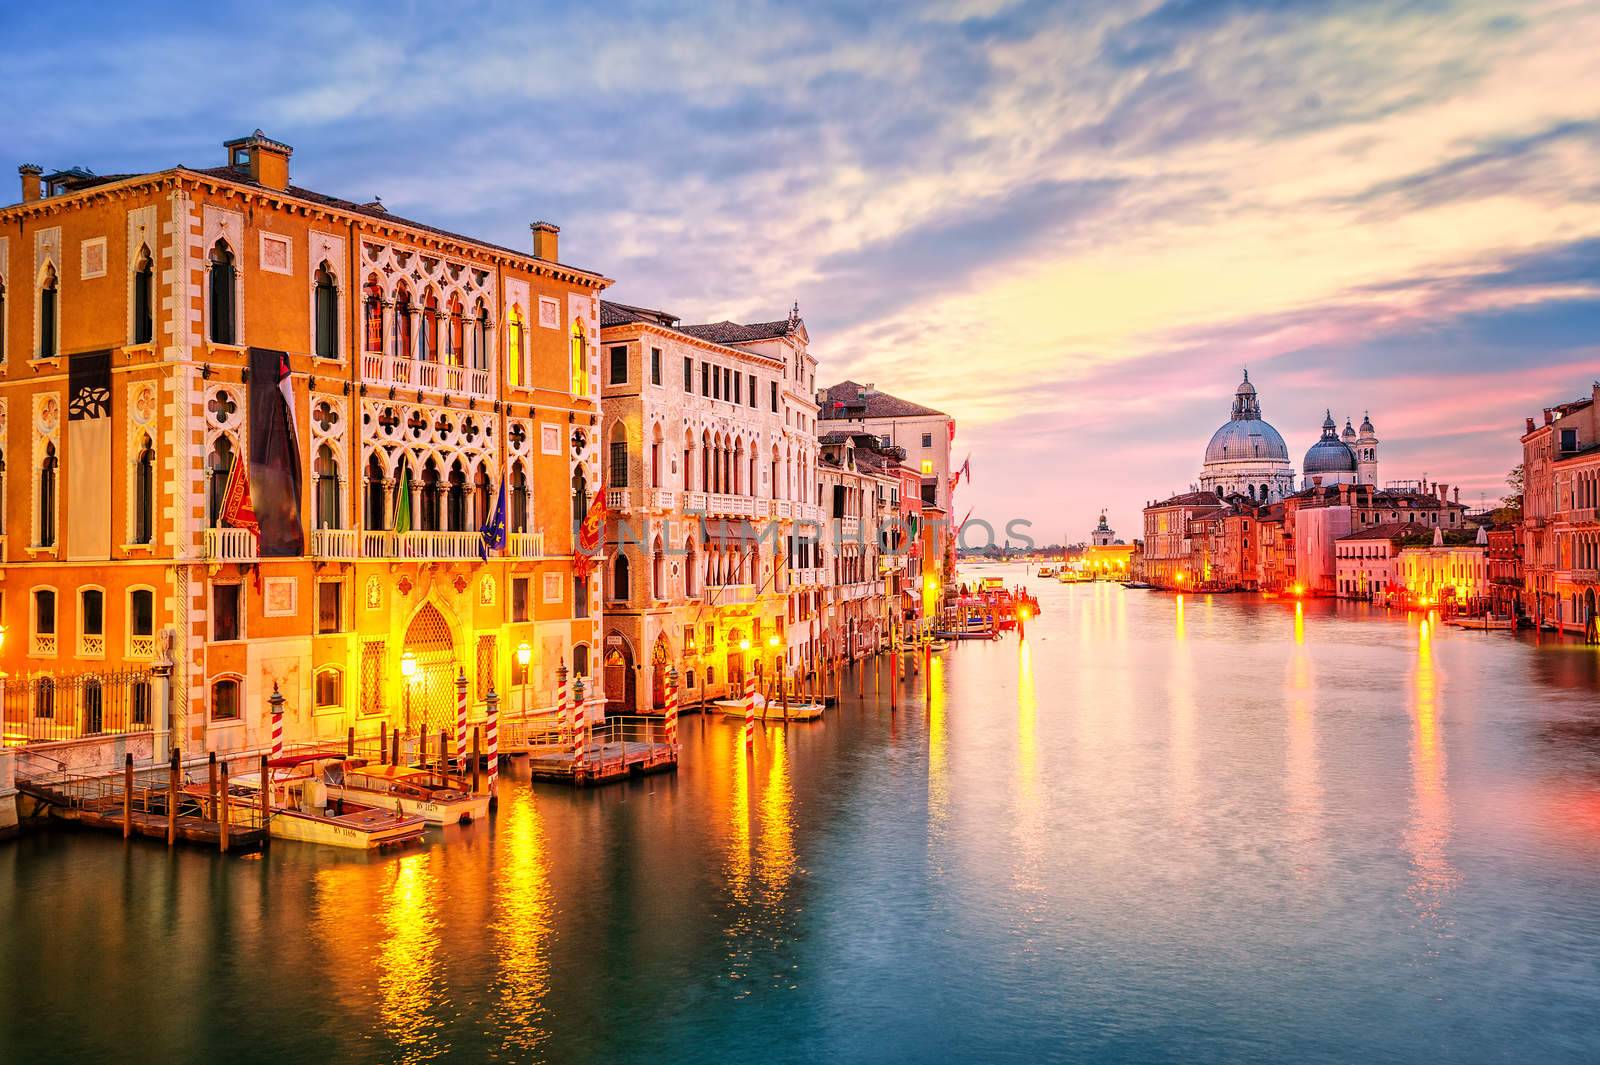 The Grand Canal and basilica Santa Maria della Salute on sunrise, Venice, Italy